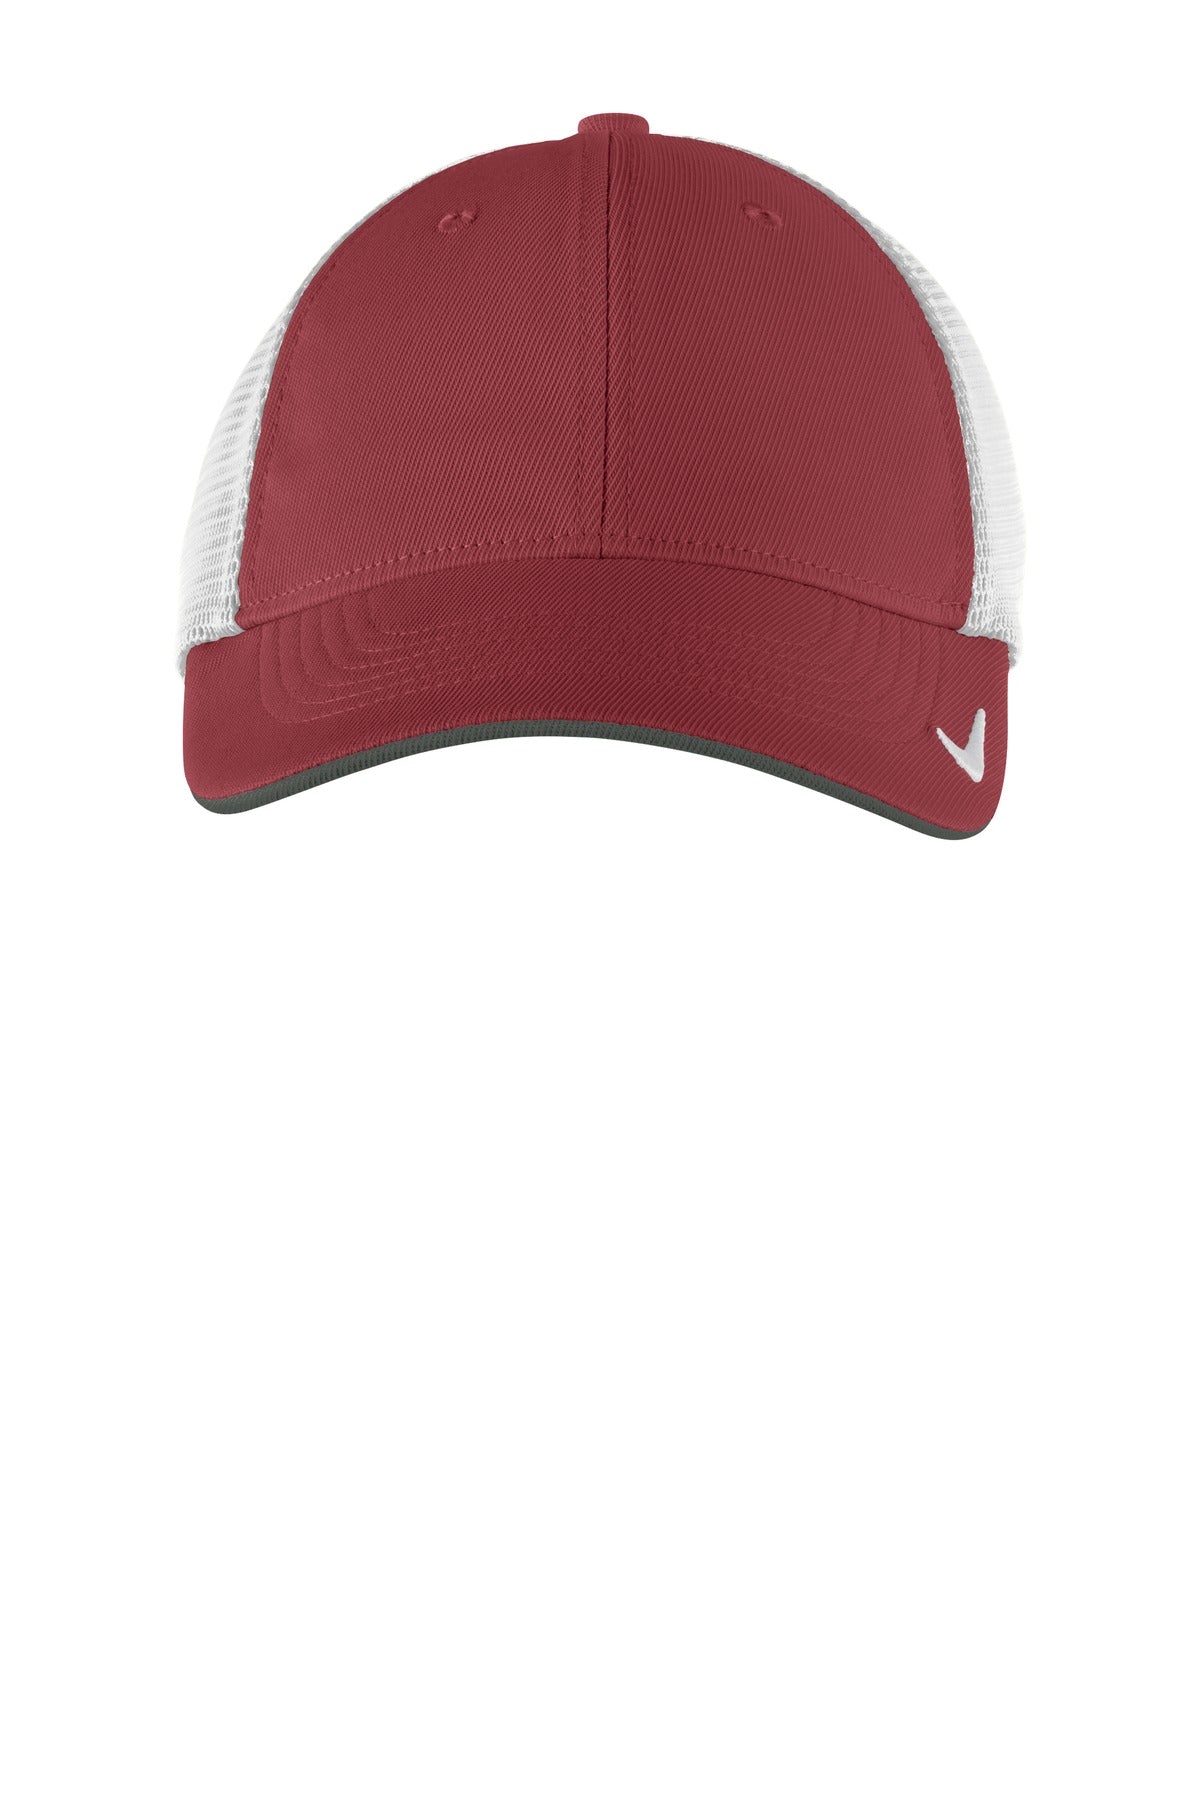 Nike Dri-FIT Mesh Back Cap. NKAO9293